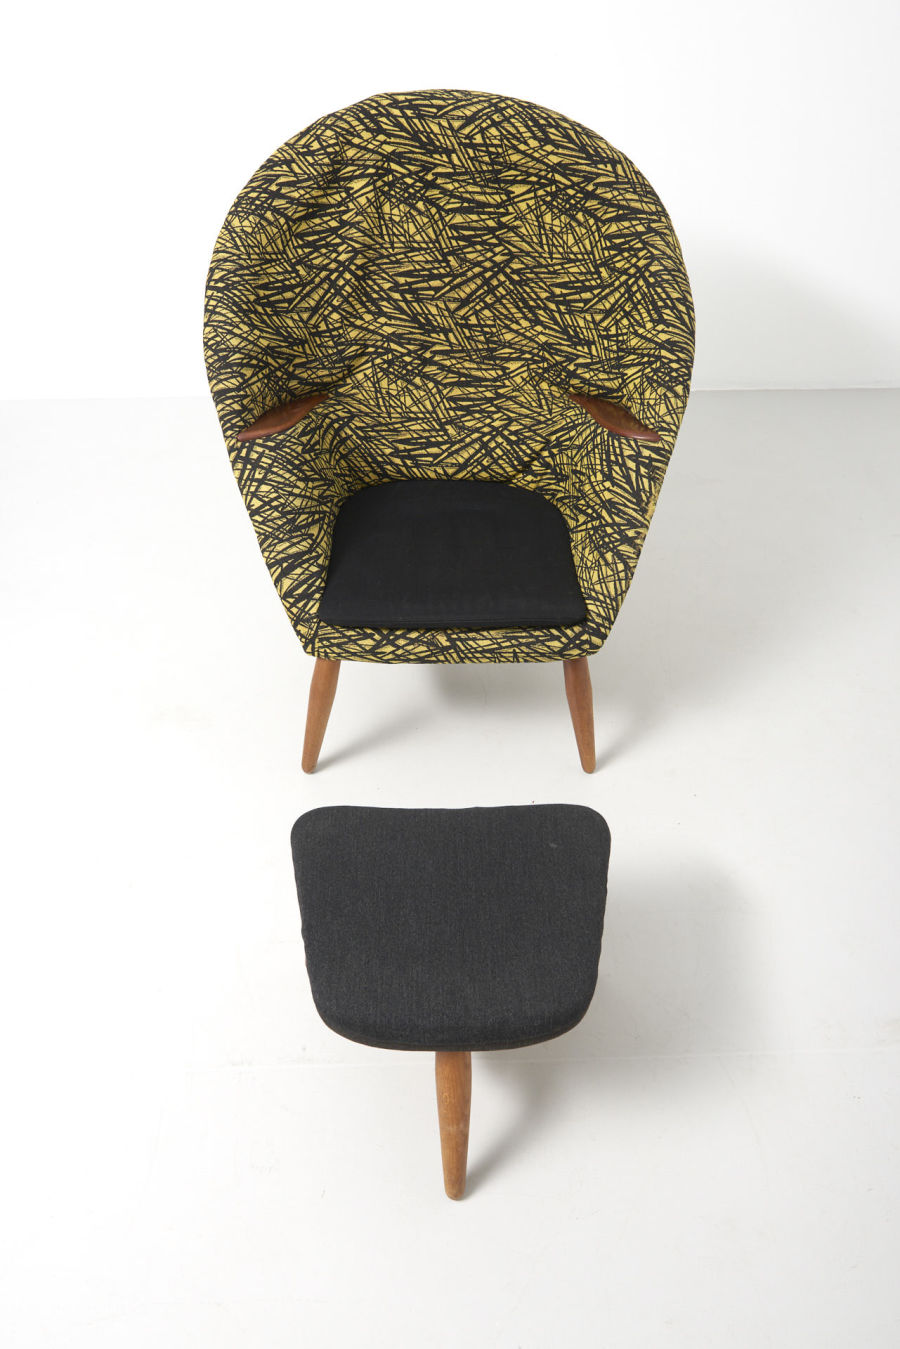 modestfurniture-vintage-1587-nanna-ditzel-oda-chair01